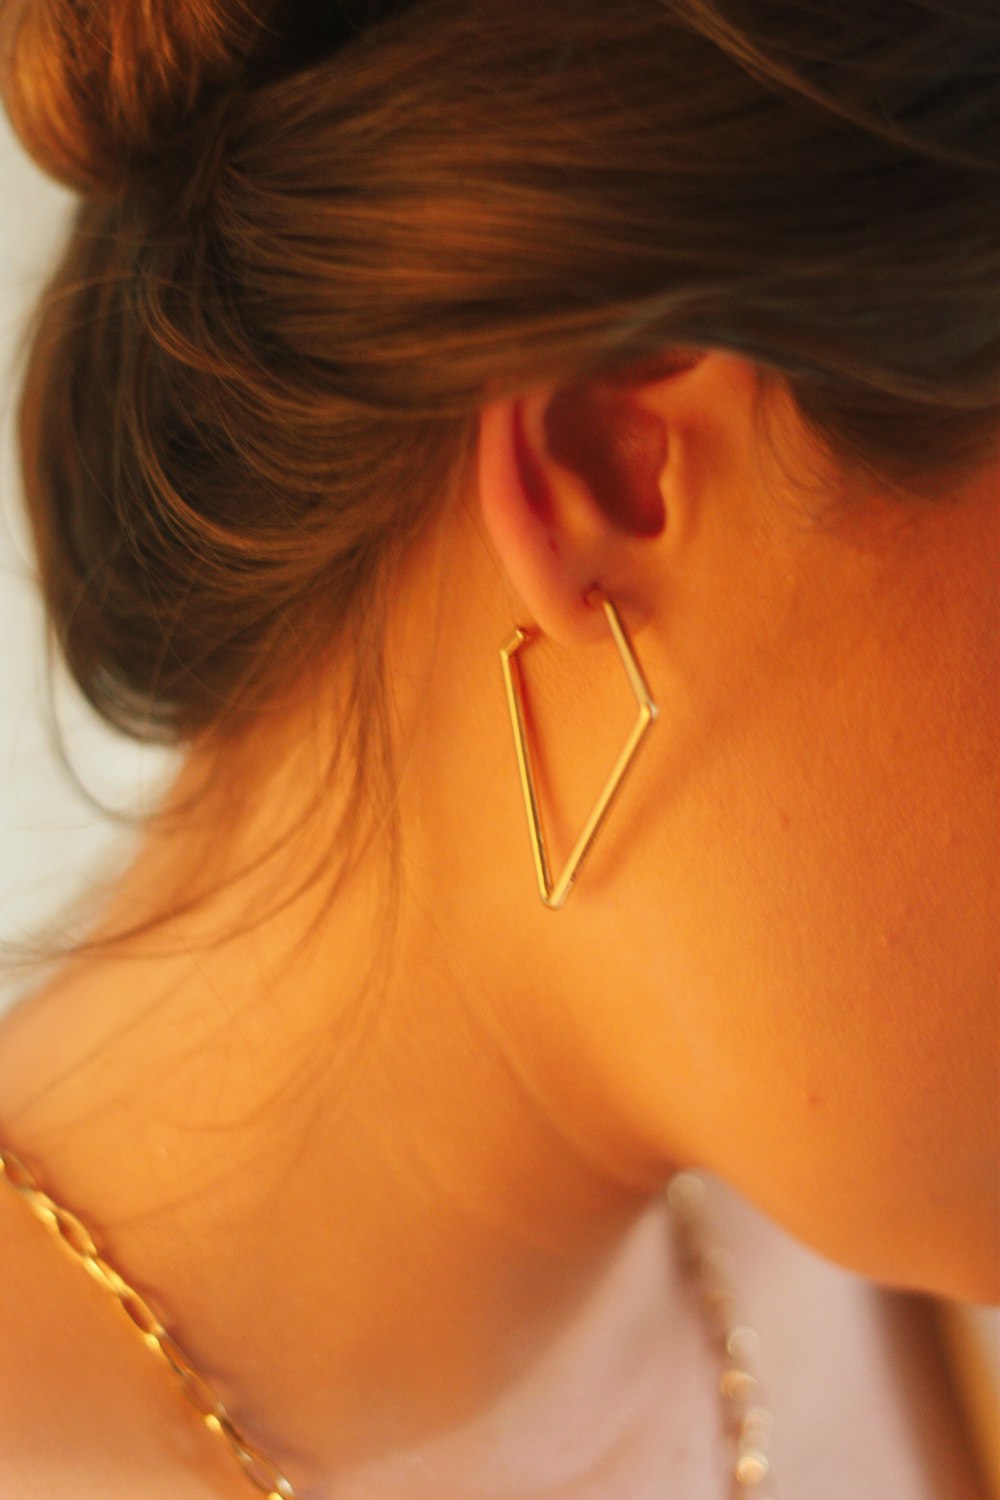 woman with gold hoop earrings